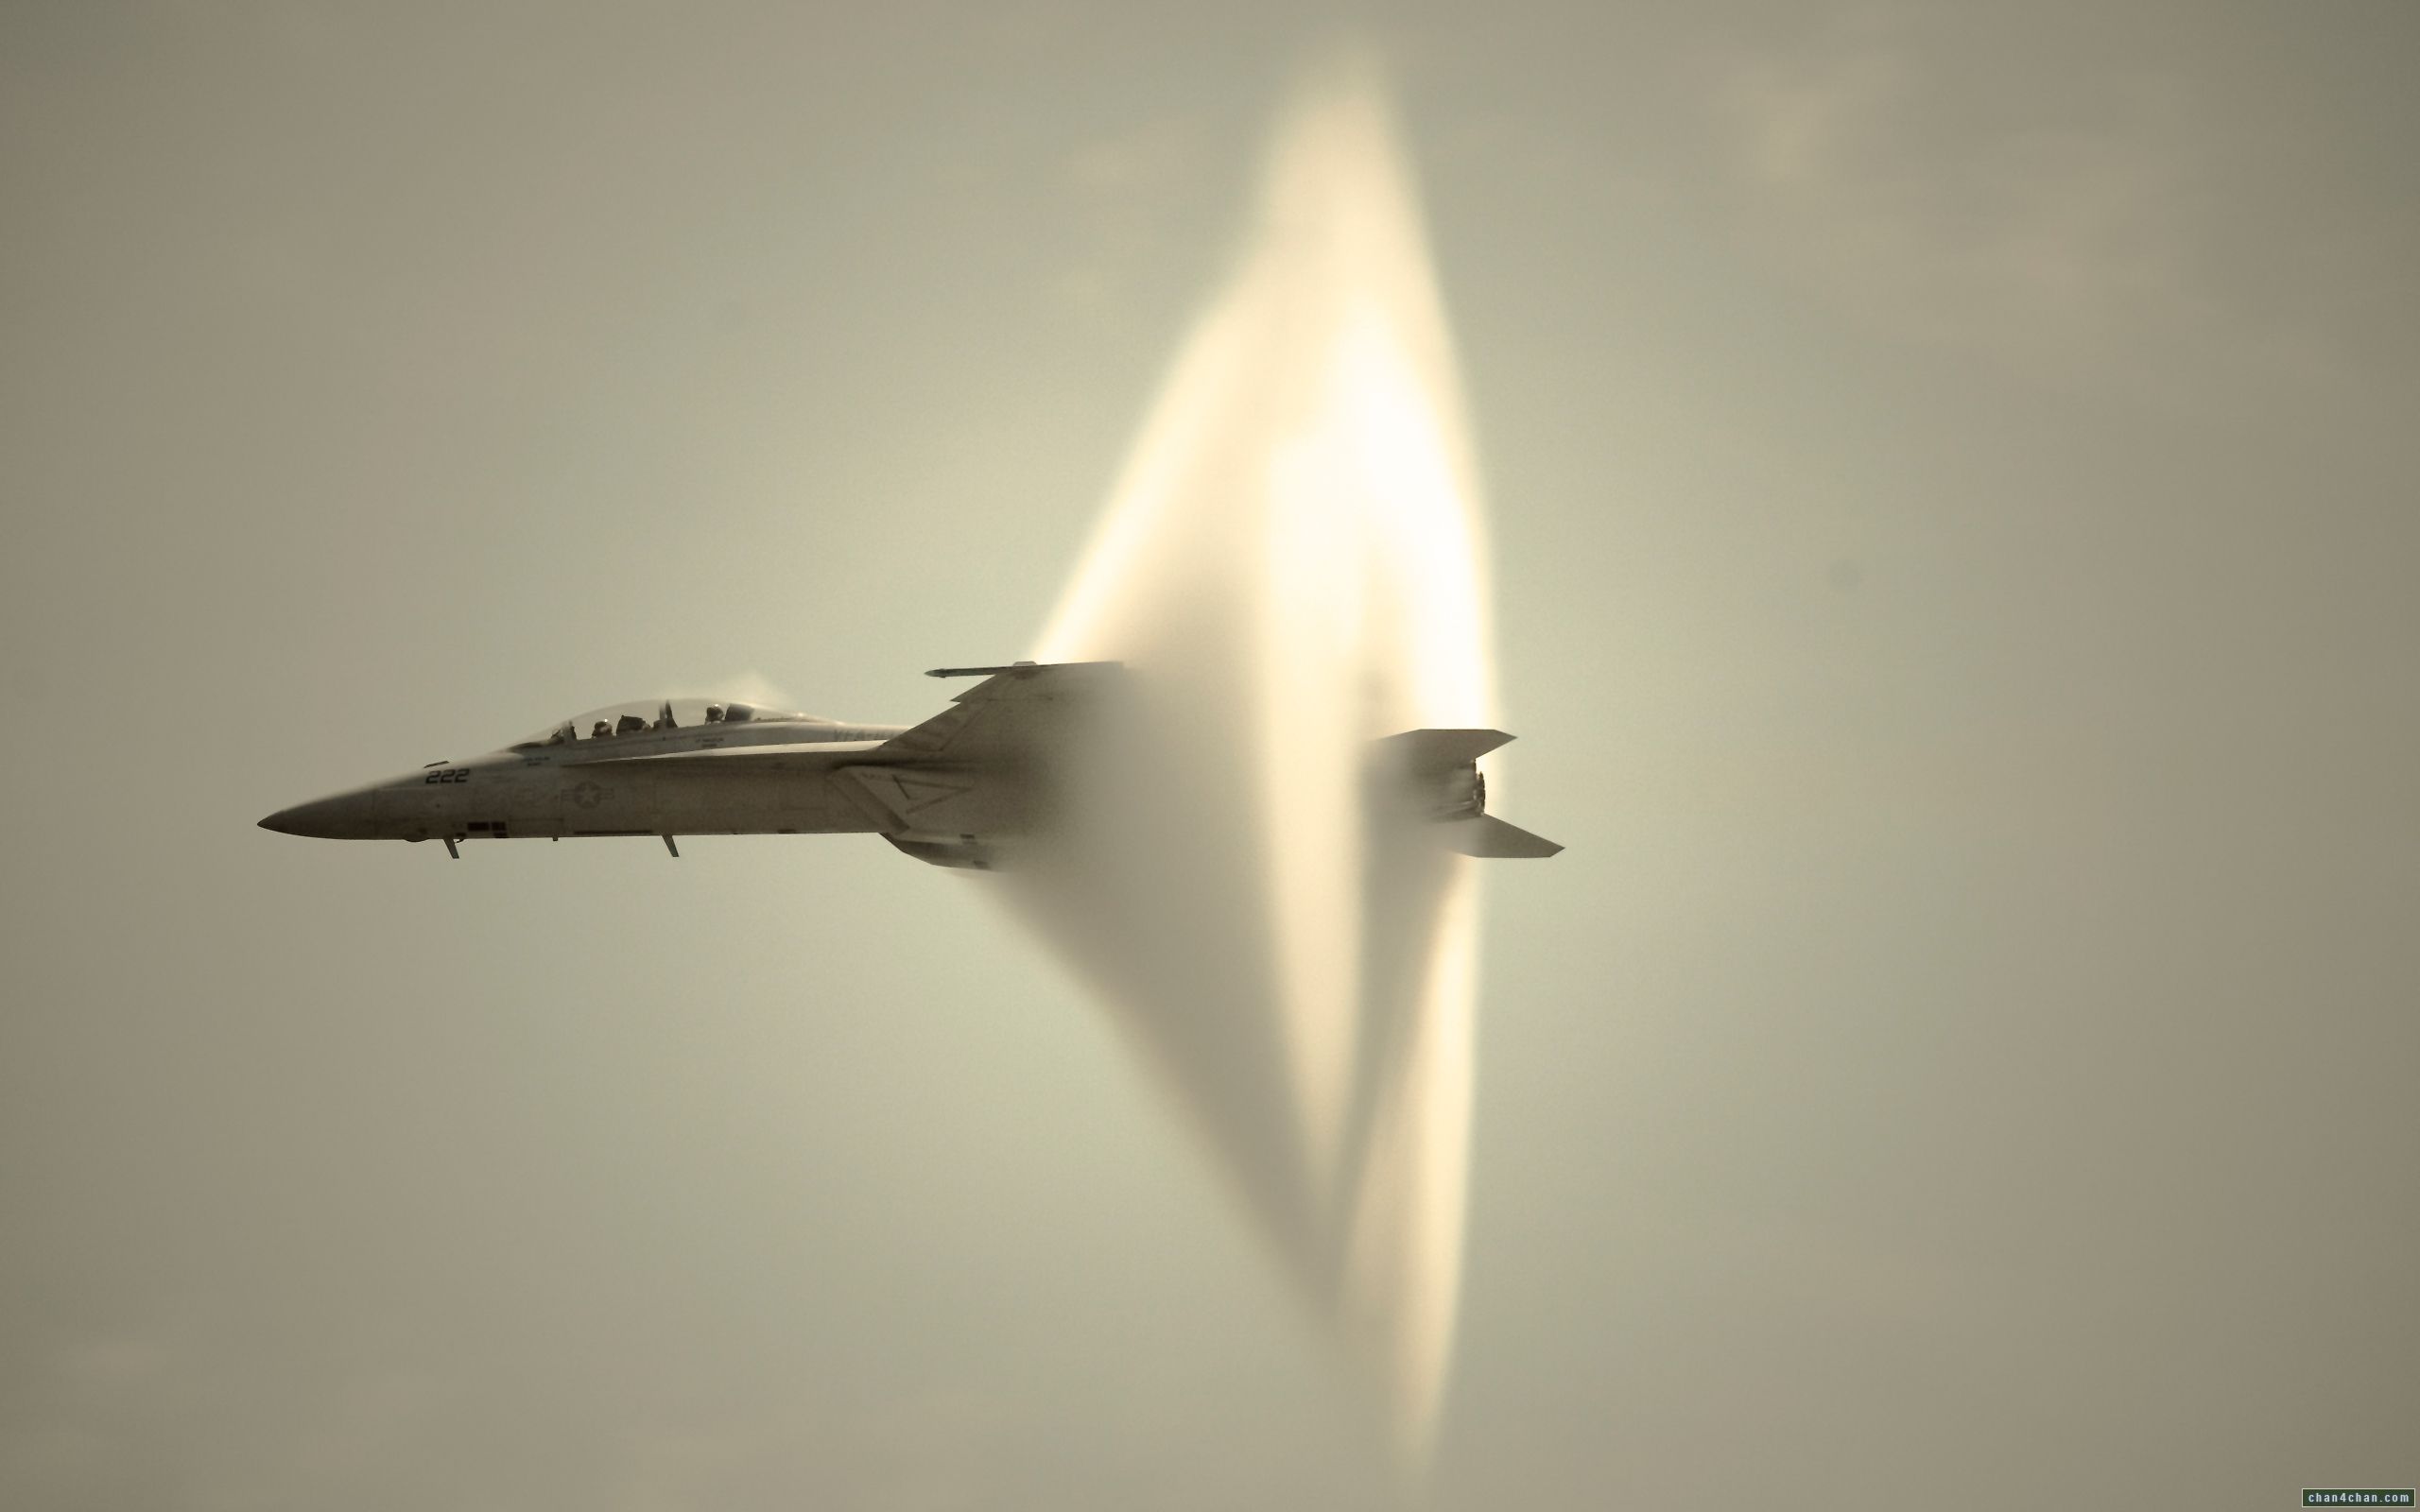 Jet breaking through the sound barrier.